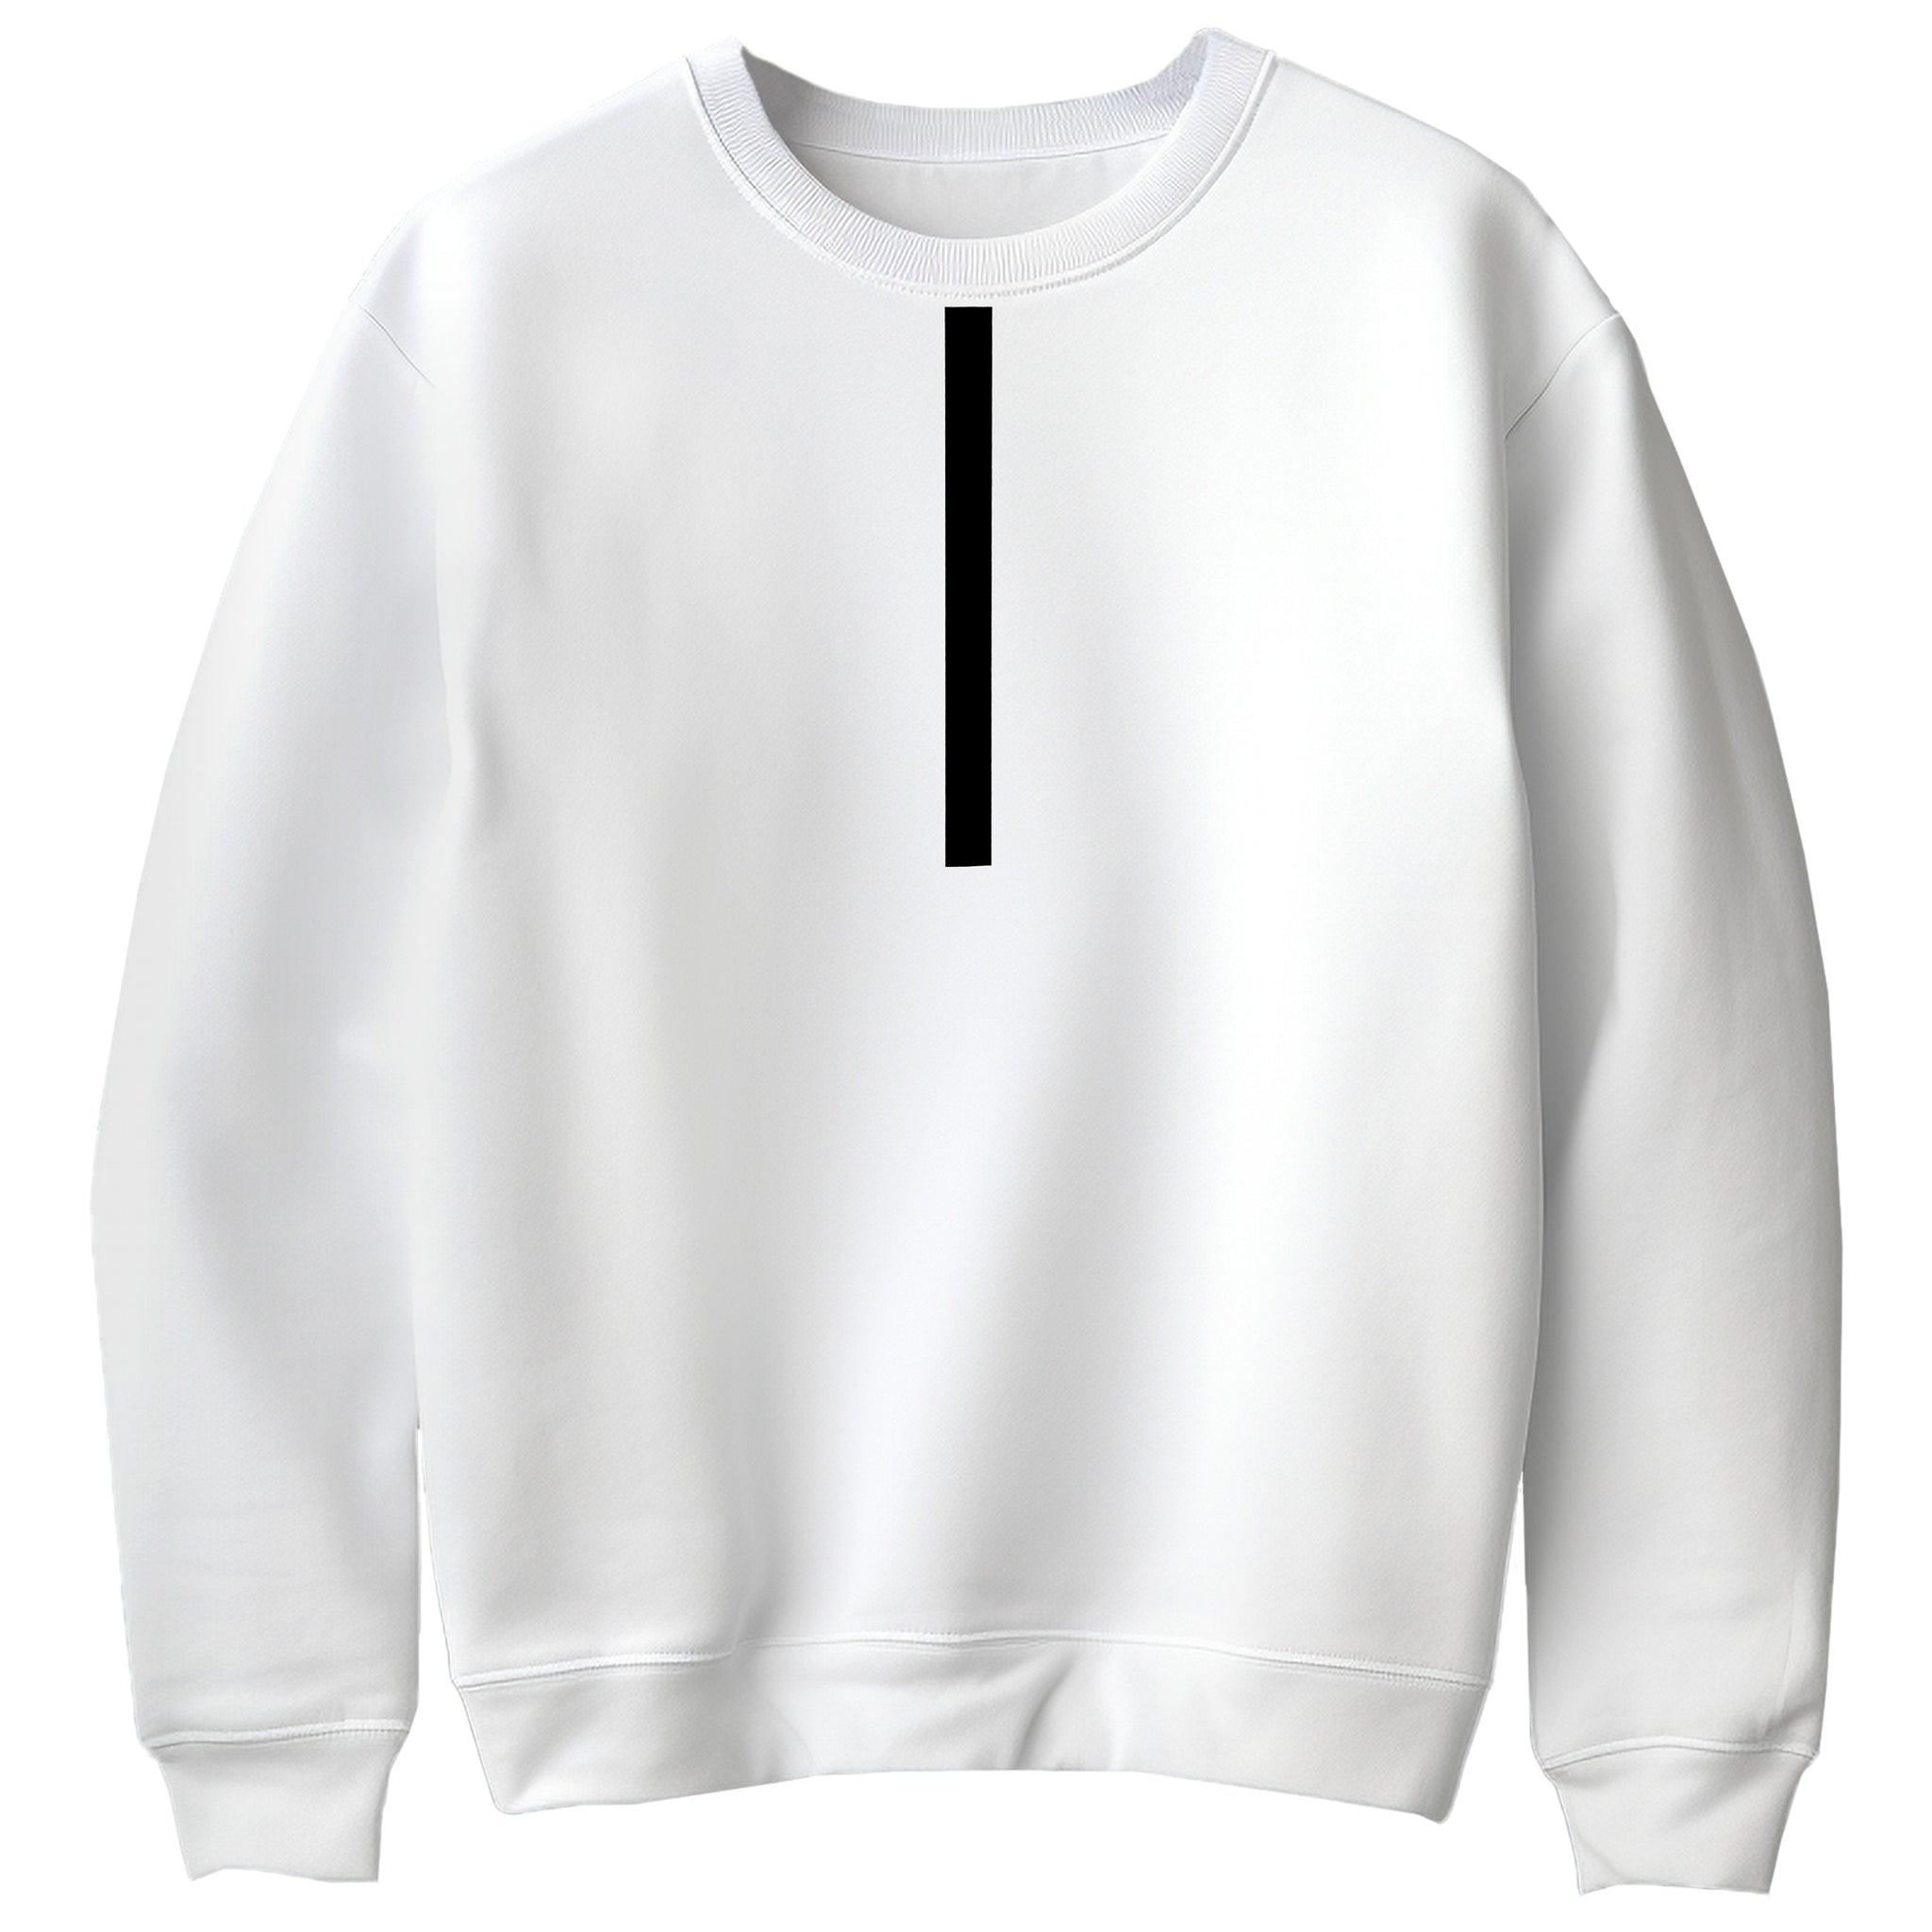 Line Sweatshirt